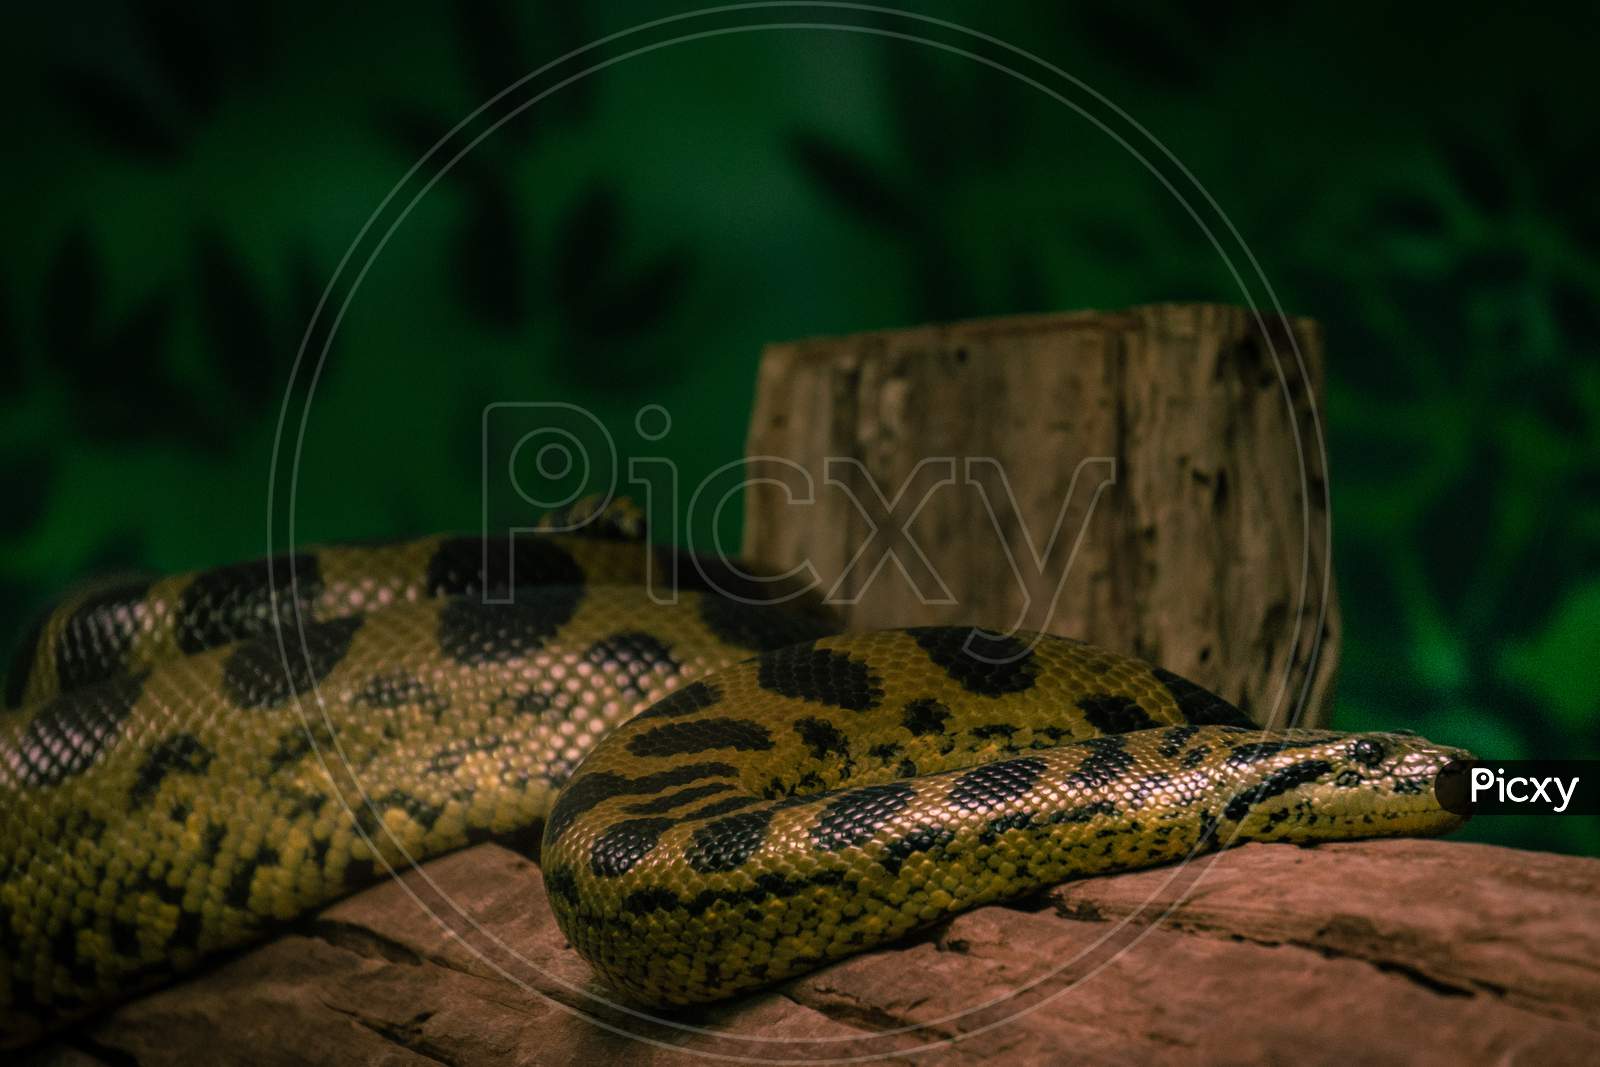 Closeup Shot of Pacific gopher snake, Mysore Zoo